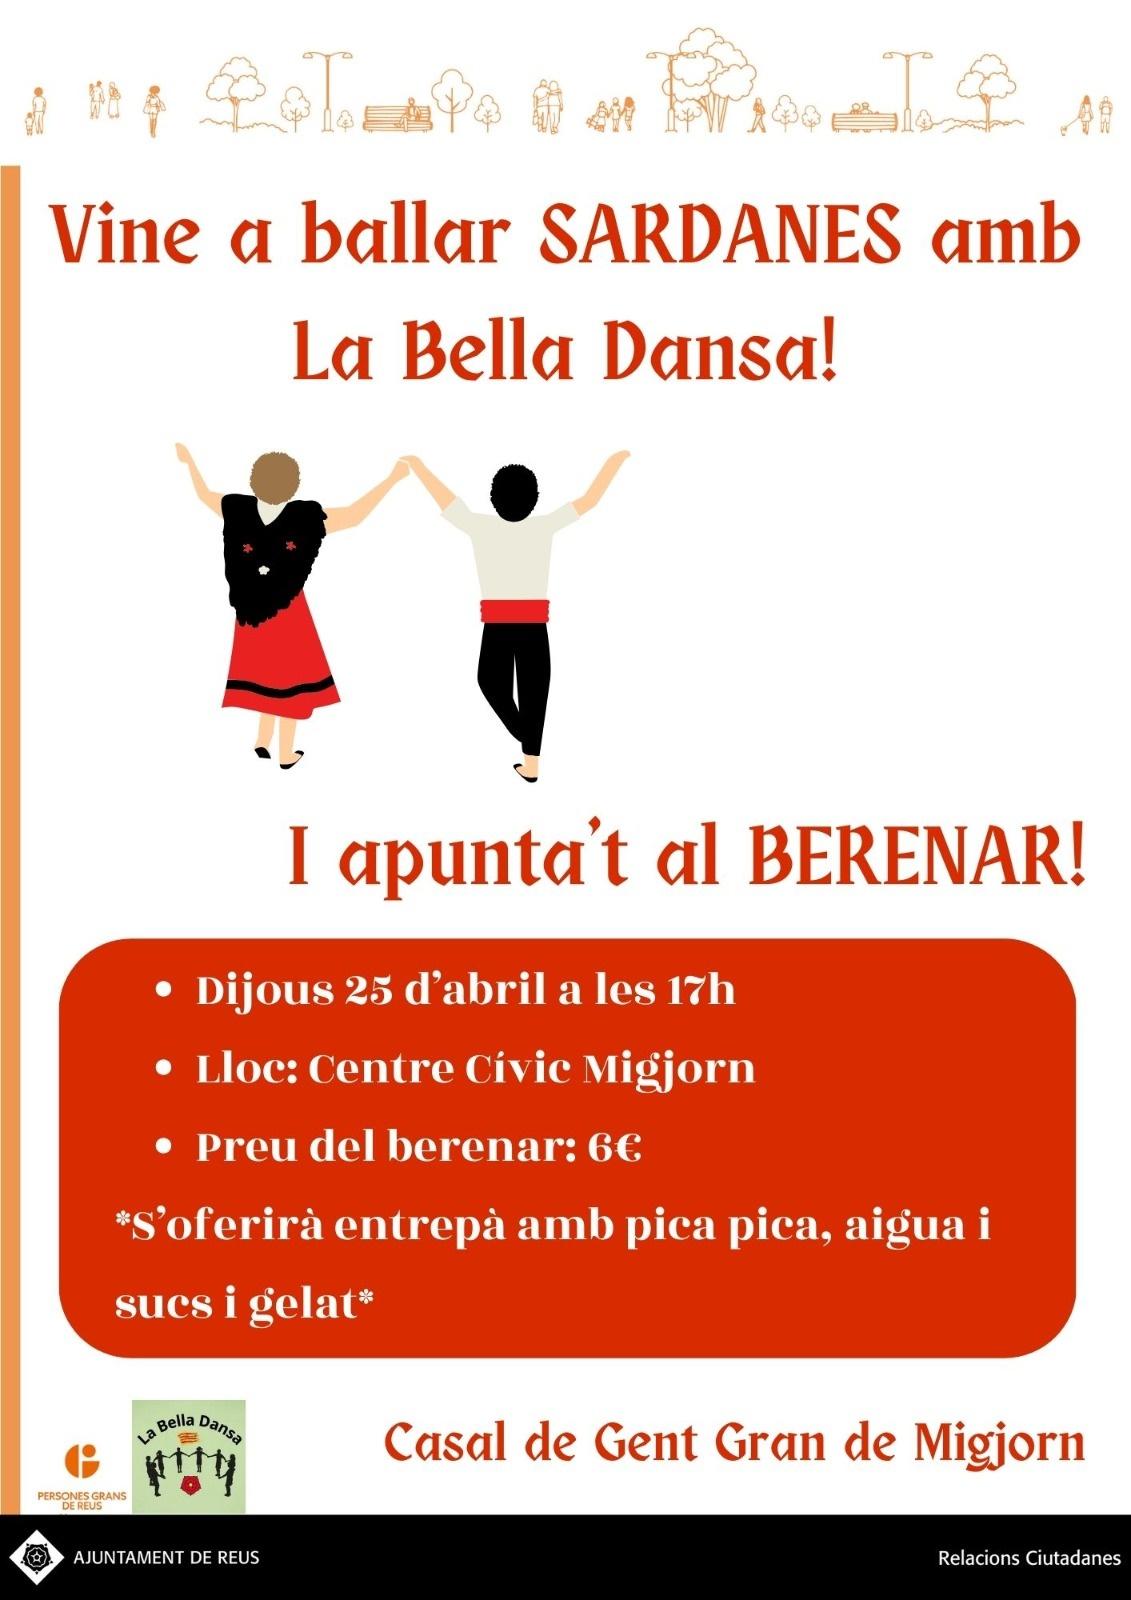 Vine a ballar sardanes amb La Bella Dansa!